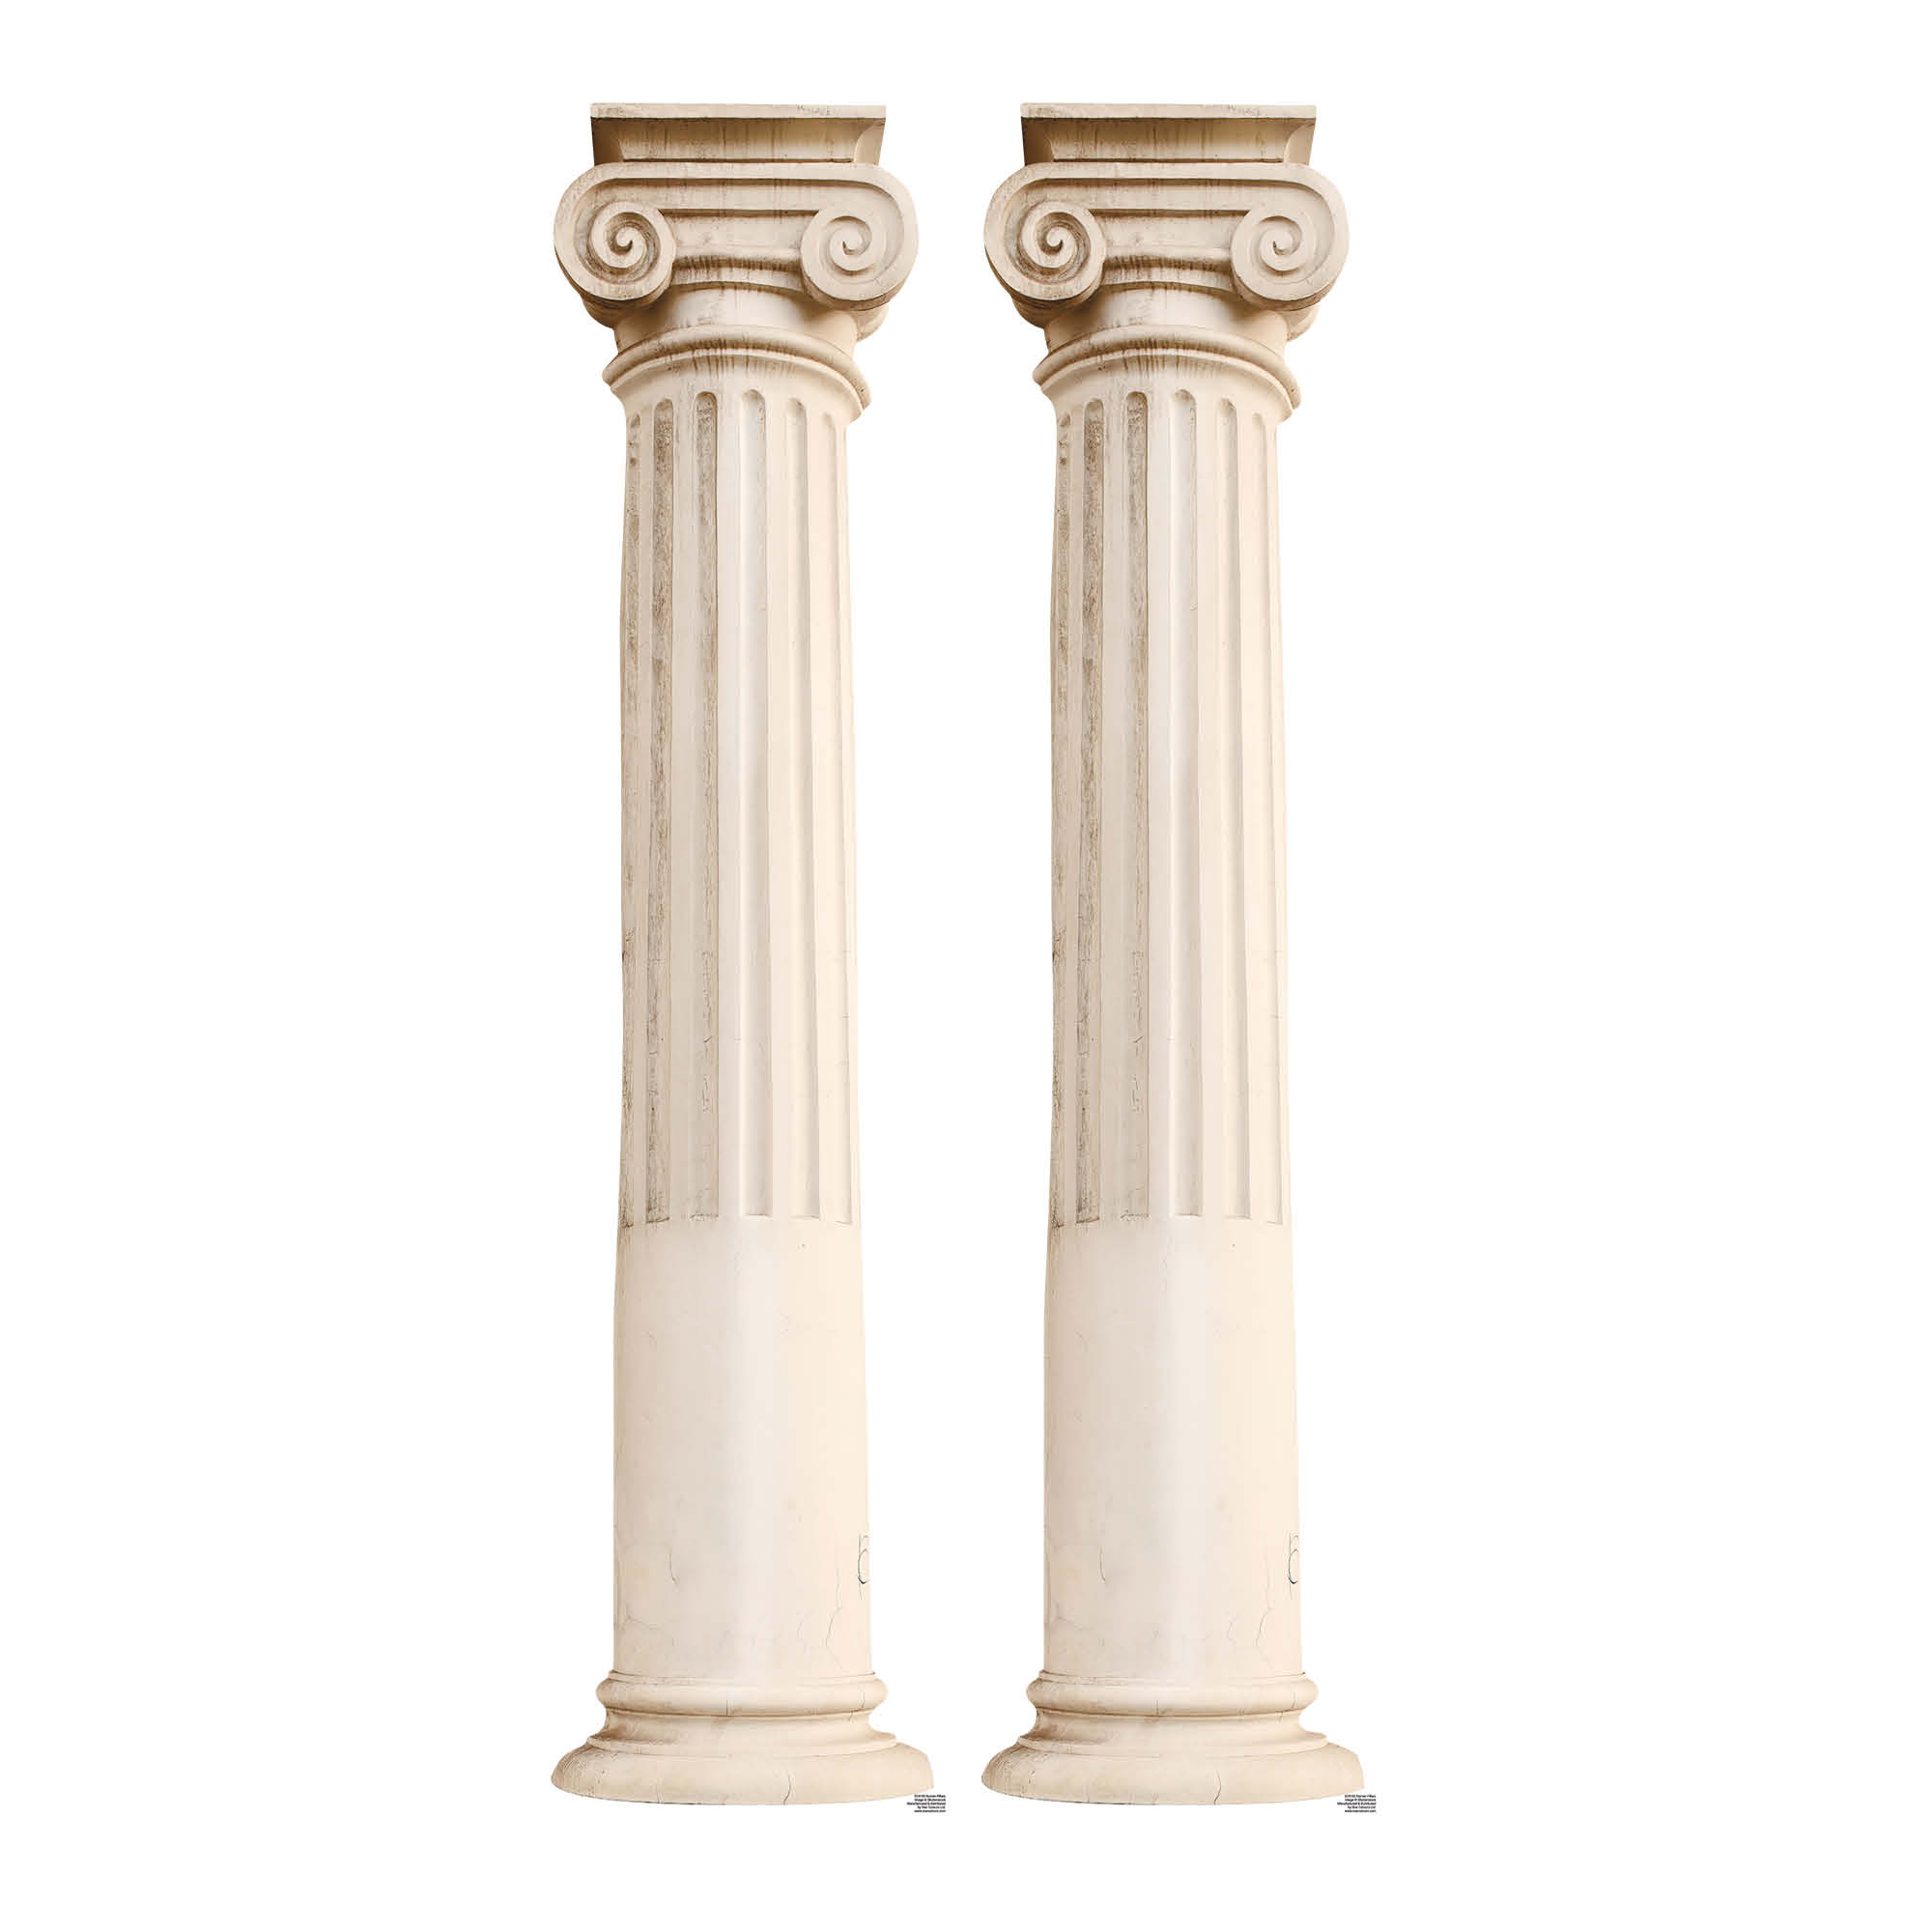 Two Roman Pillars